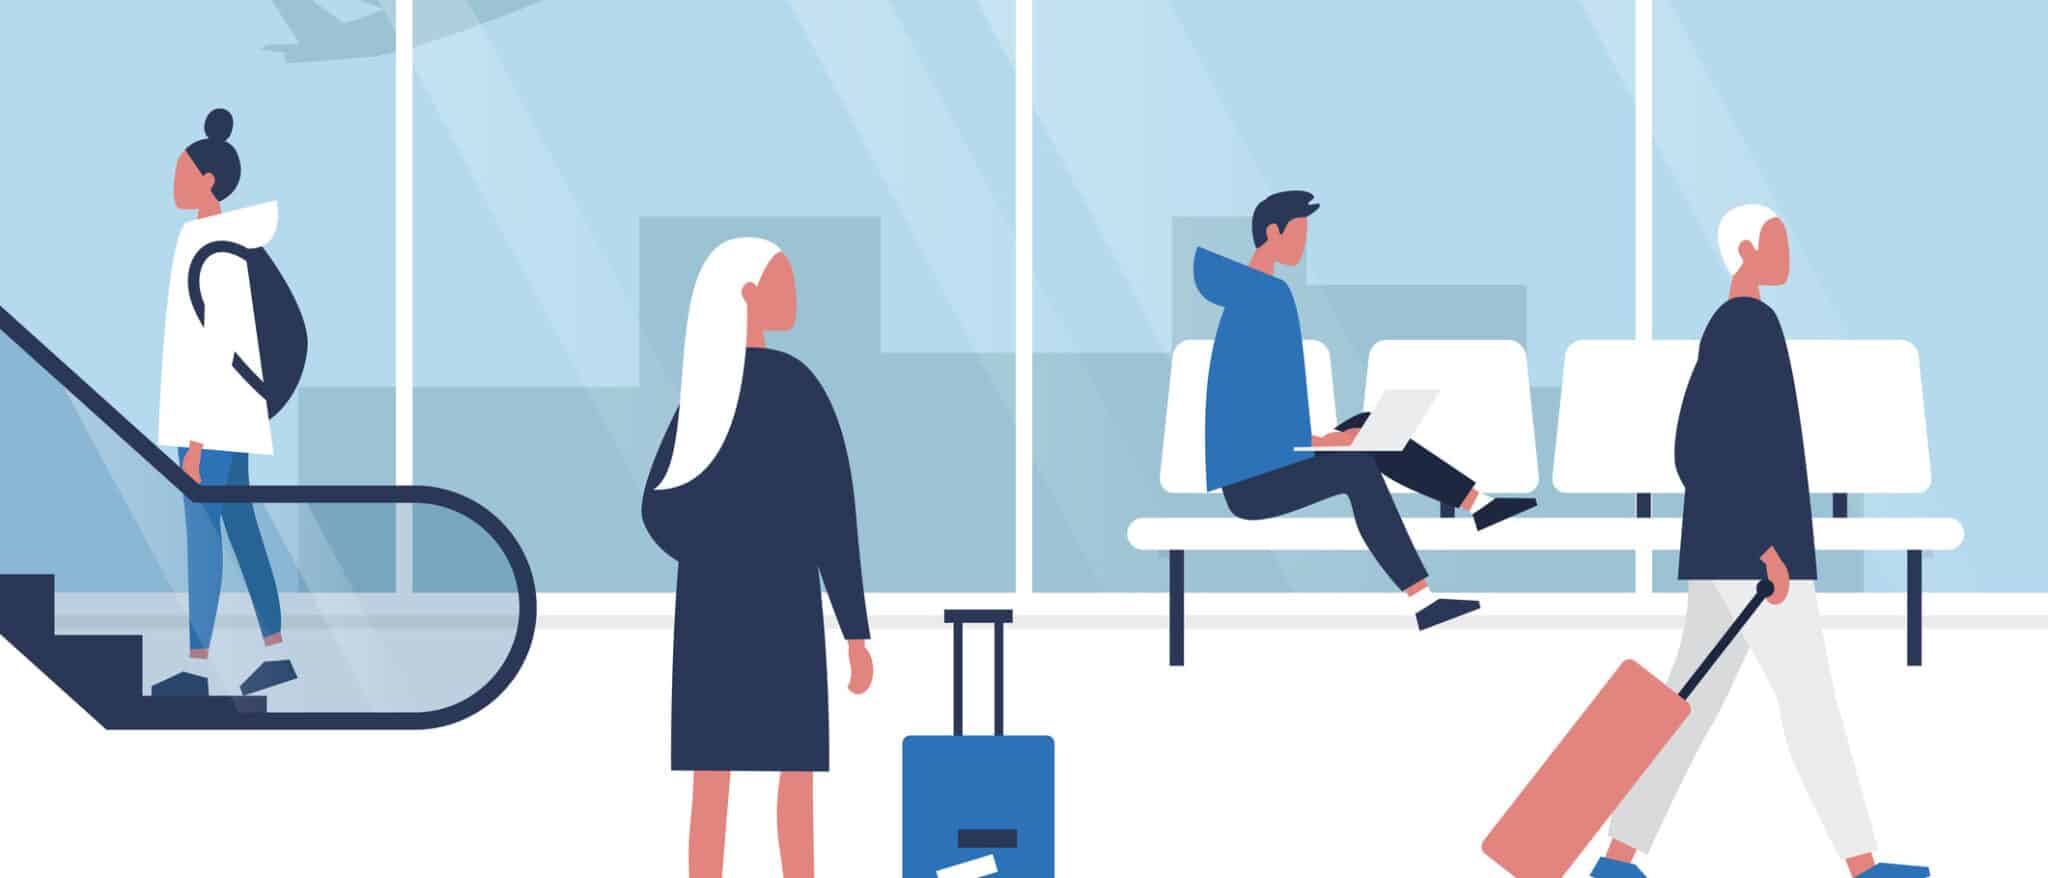 viajes en avion aeropuerto ilustracion de personas viajando